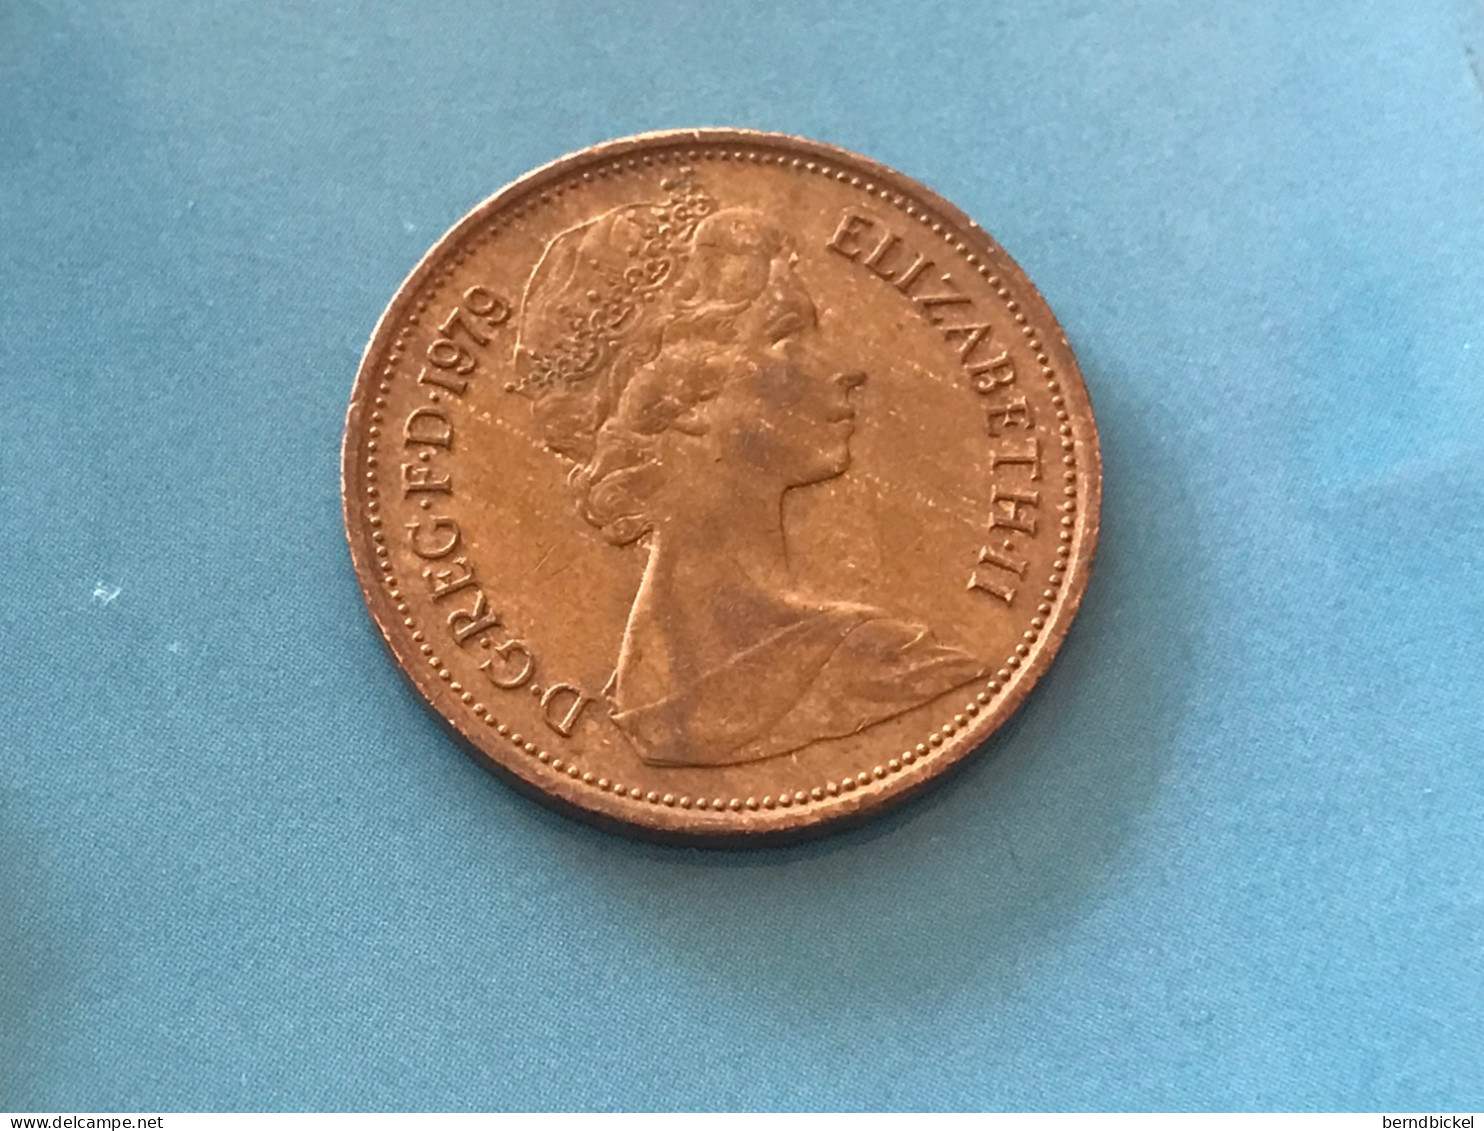 Münze Münzen Umlaufmünze Großbritannien 2 Pence 1979 - 2 Pence & 2 New Pence